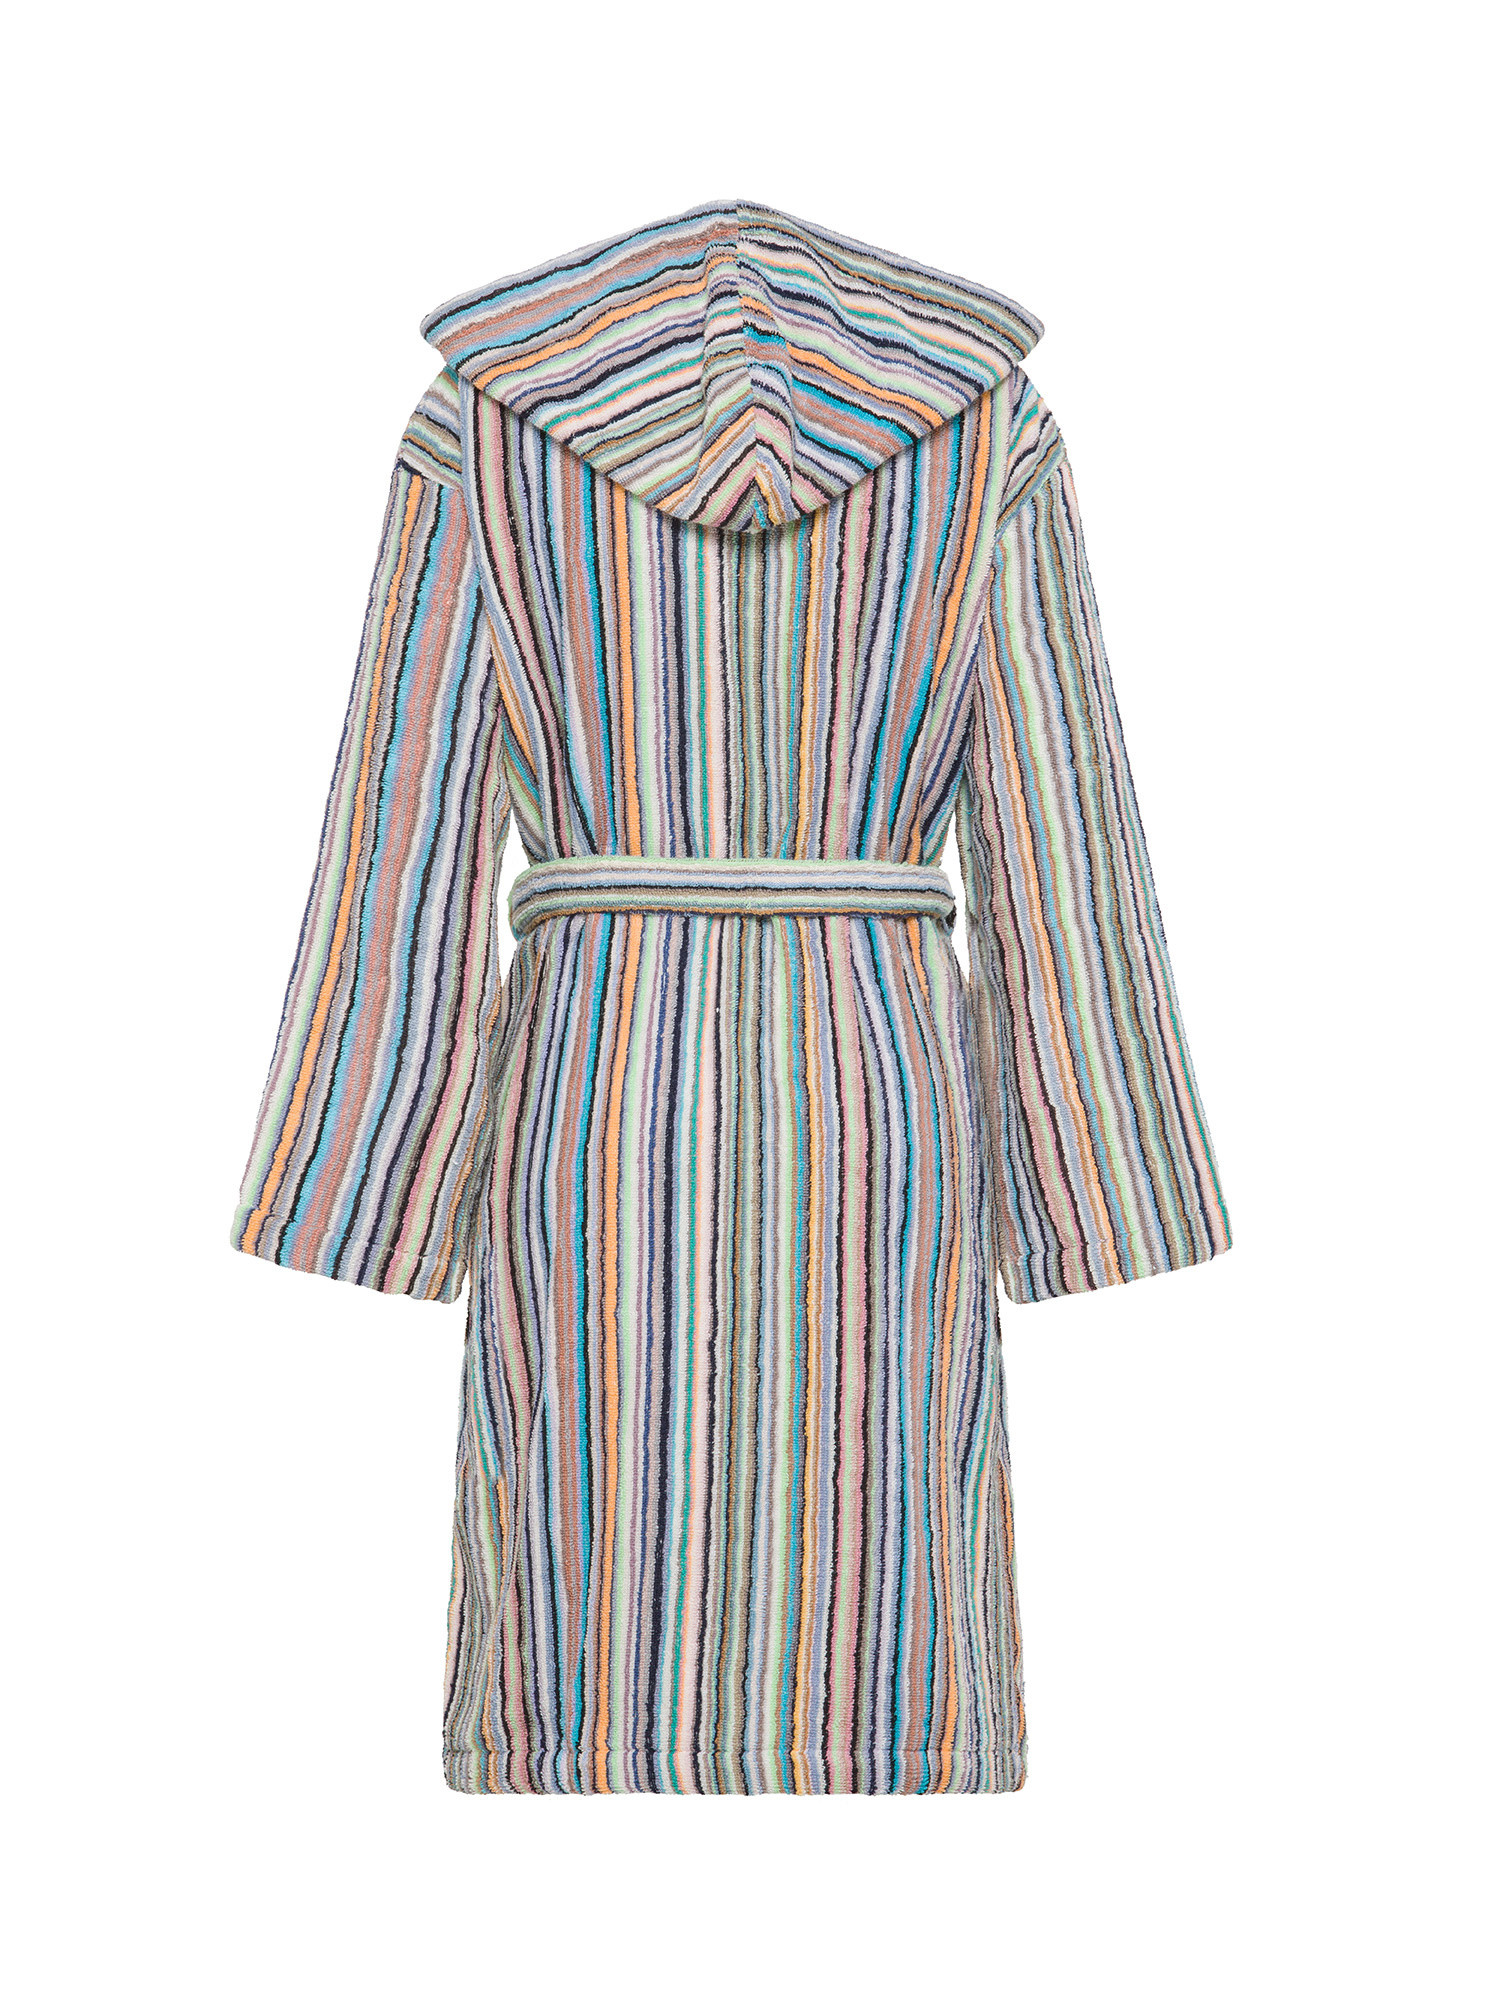 Striped jacquard cotton terry bathrobe, Pink, large image number 1